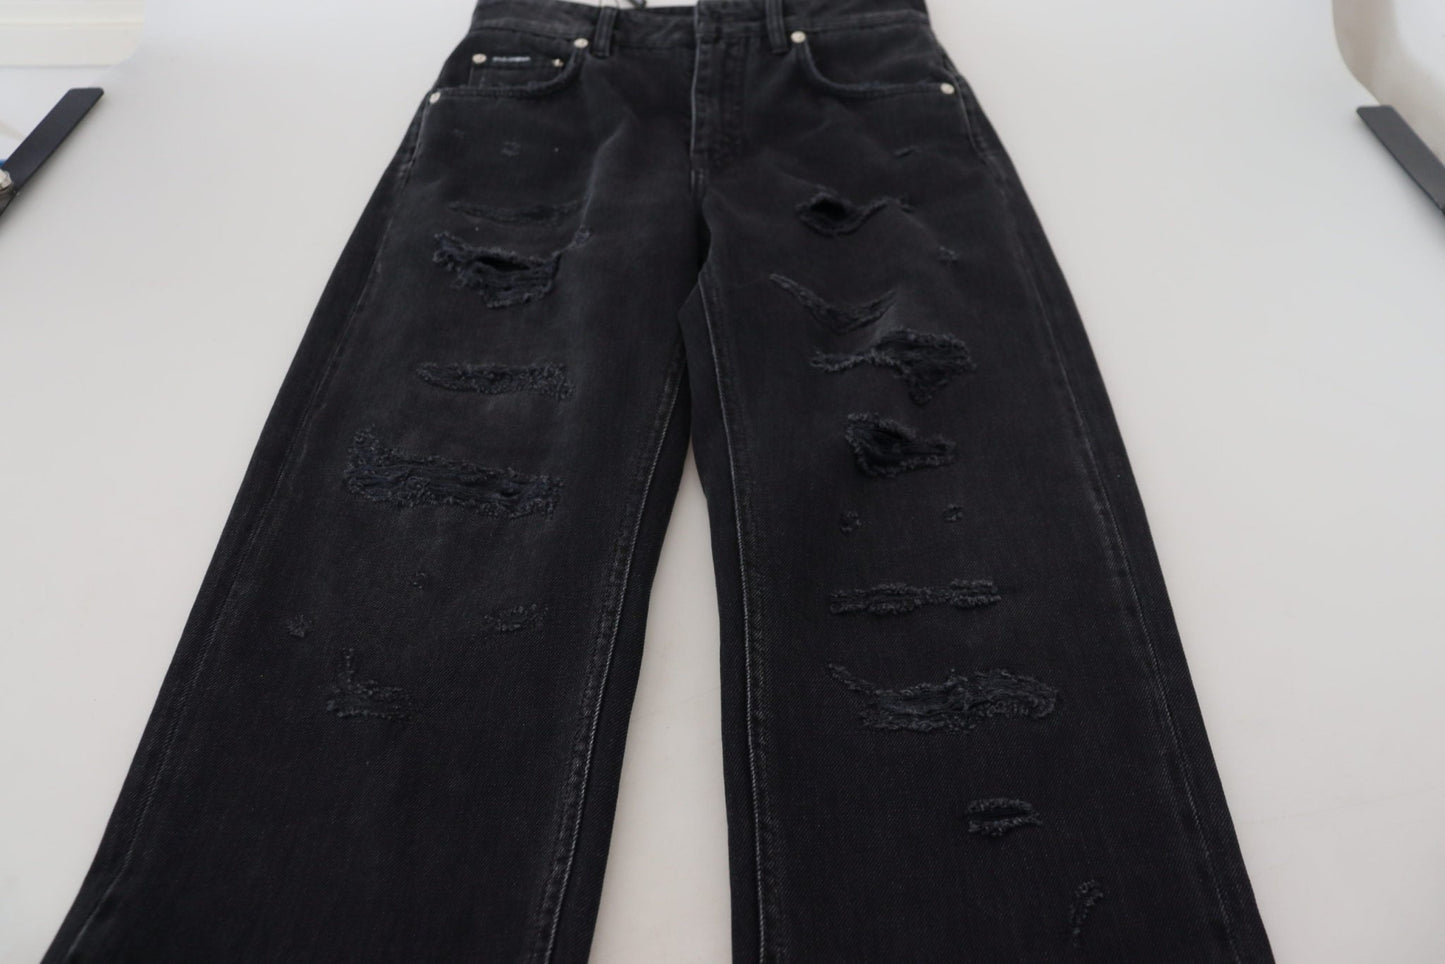 Dolce & Gabbana Black Cotton Tattered High Waist Denim Jeans